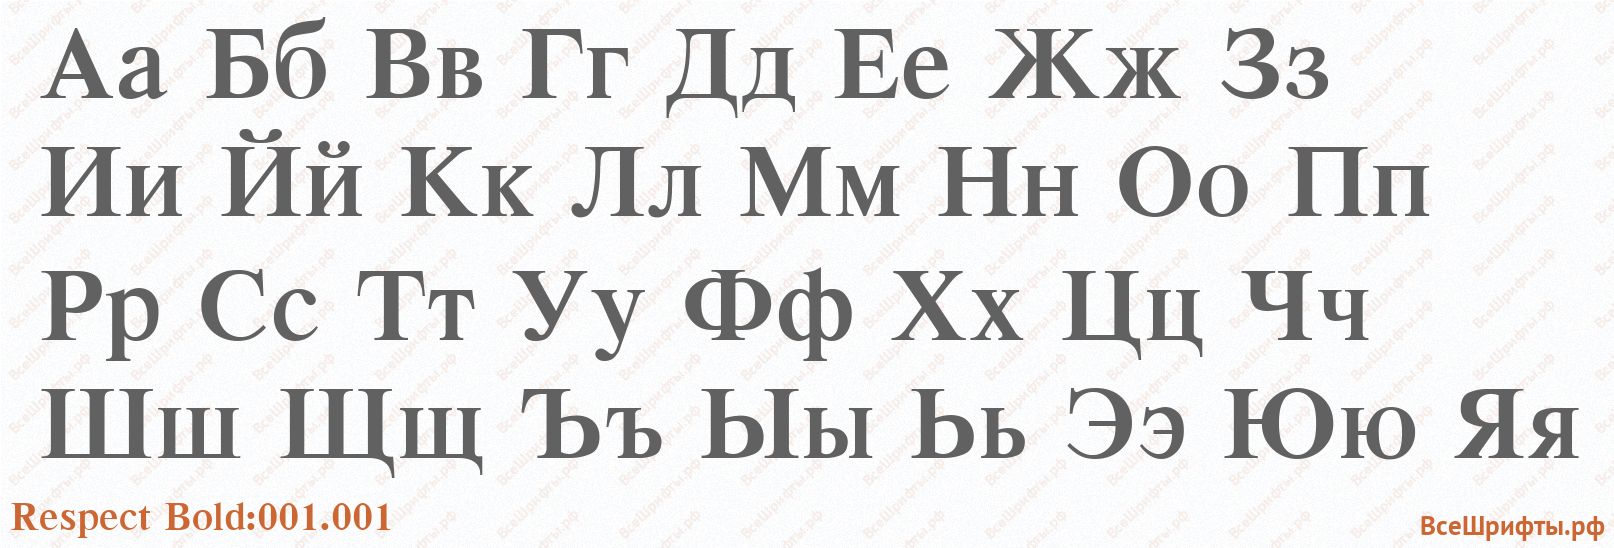 Шрифт Respect Bold:001.001 с русскими буквами